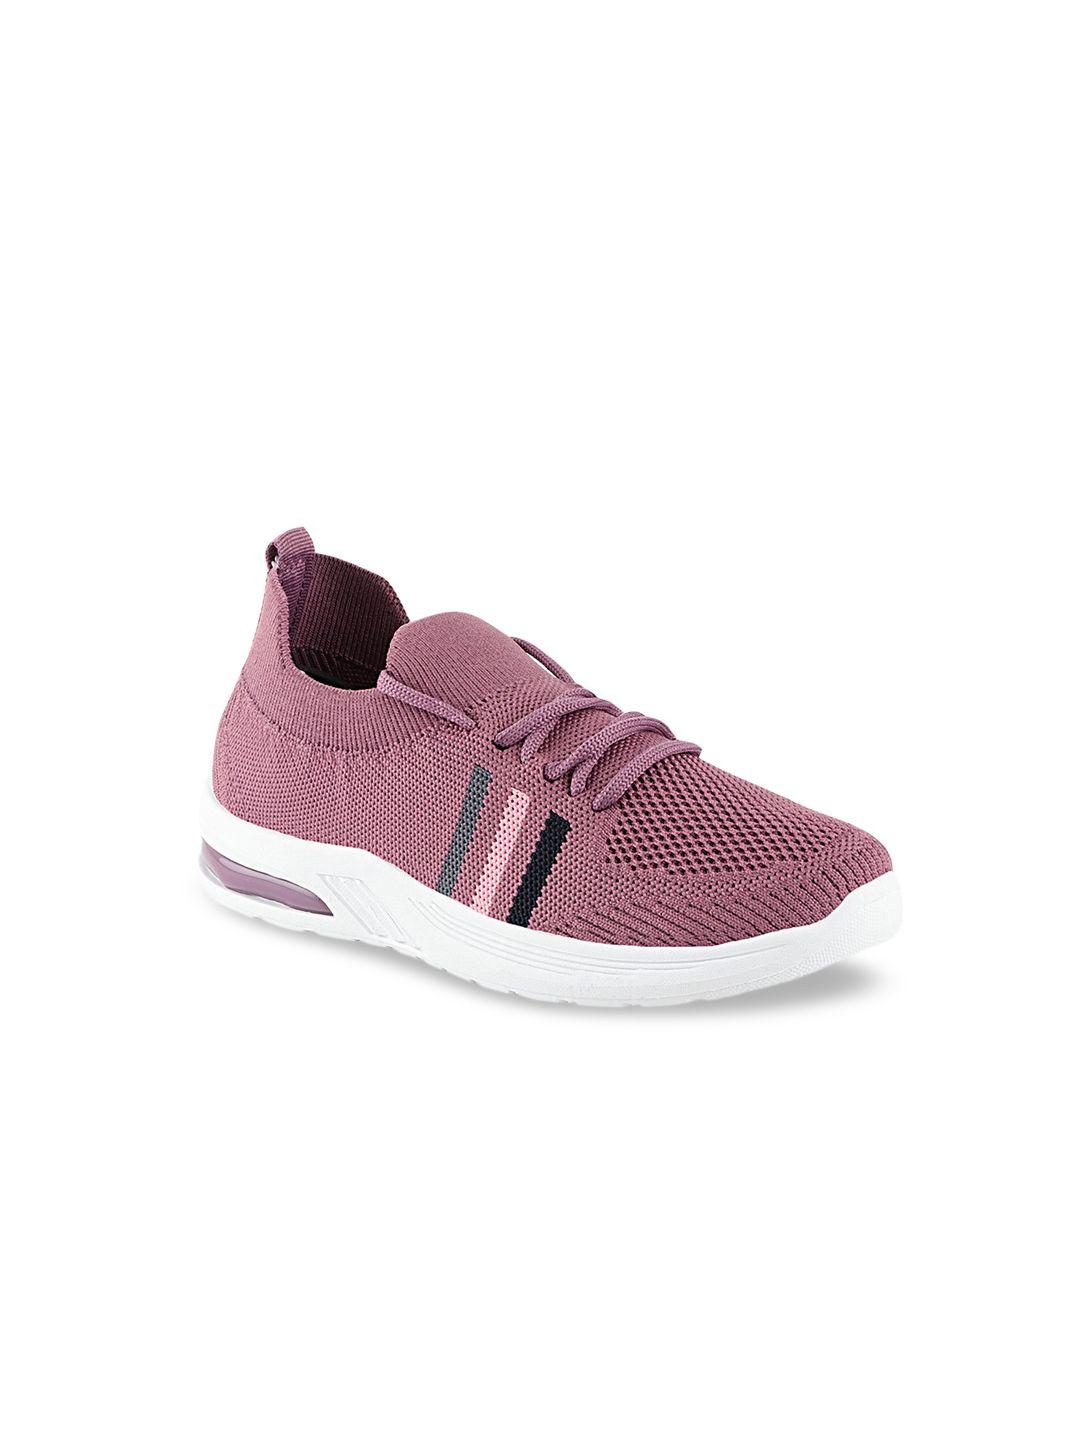 shoetopia girls purple woven design sneakers